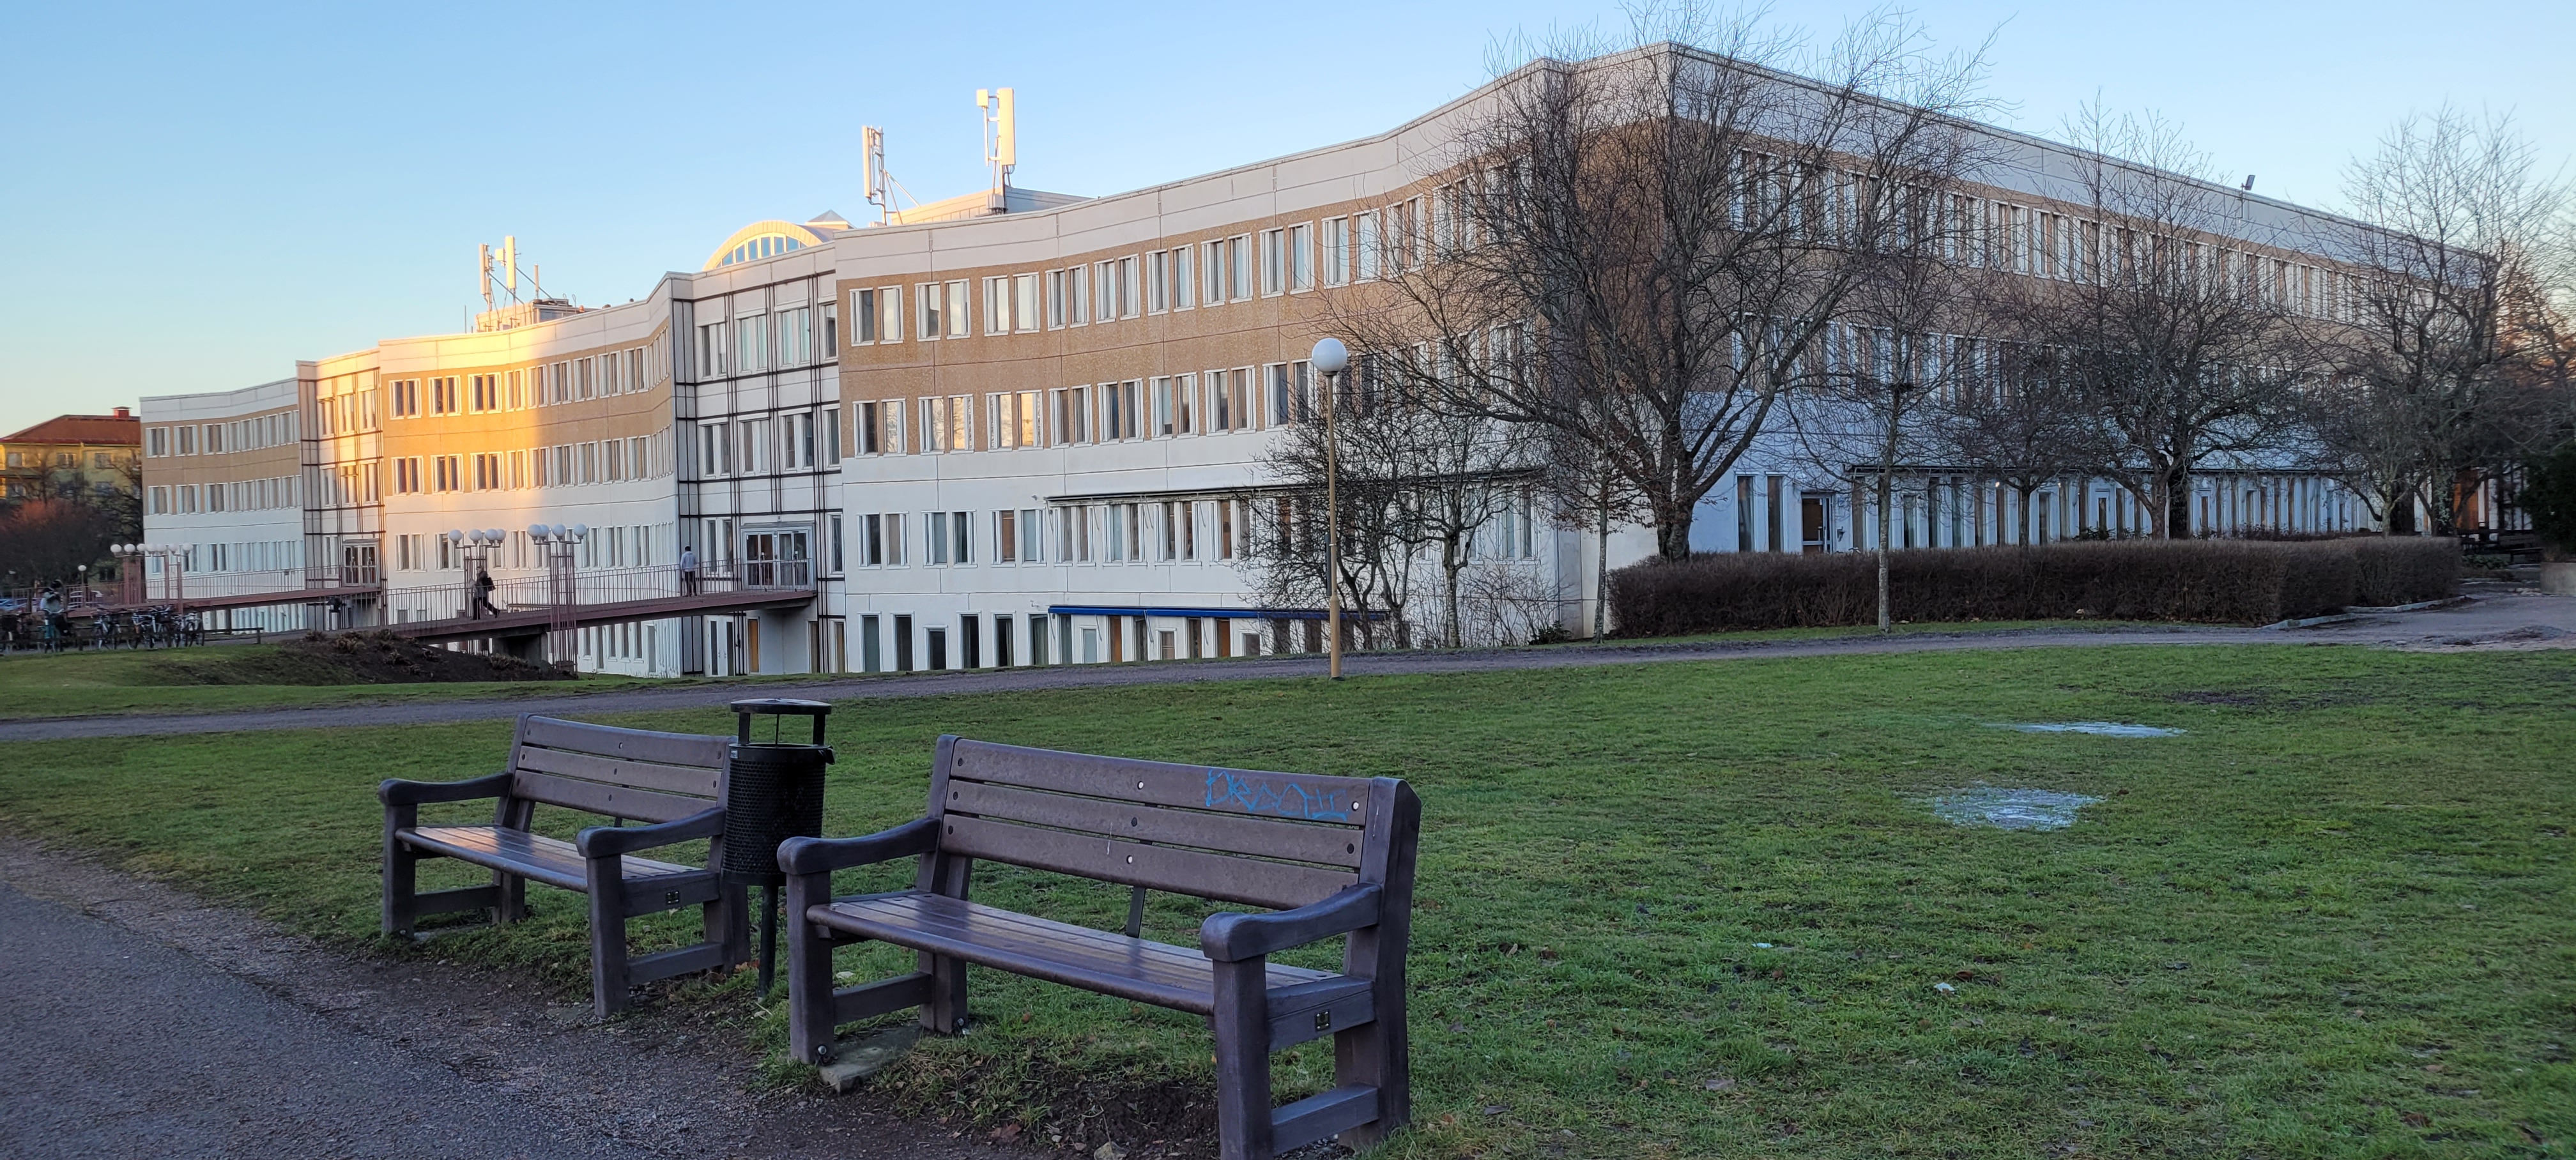 Ekonomikum (Business Department) at Uppsala University